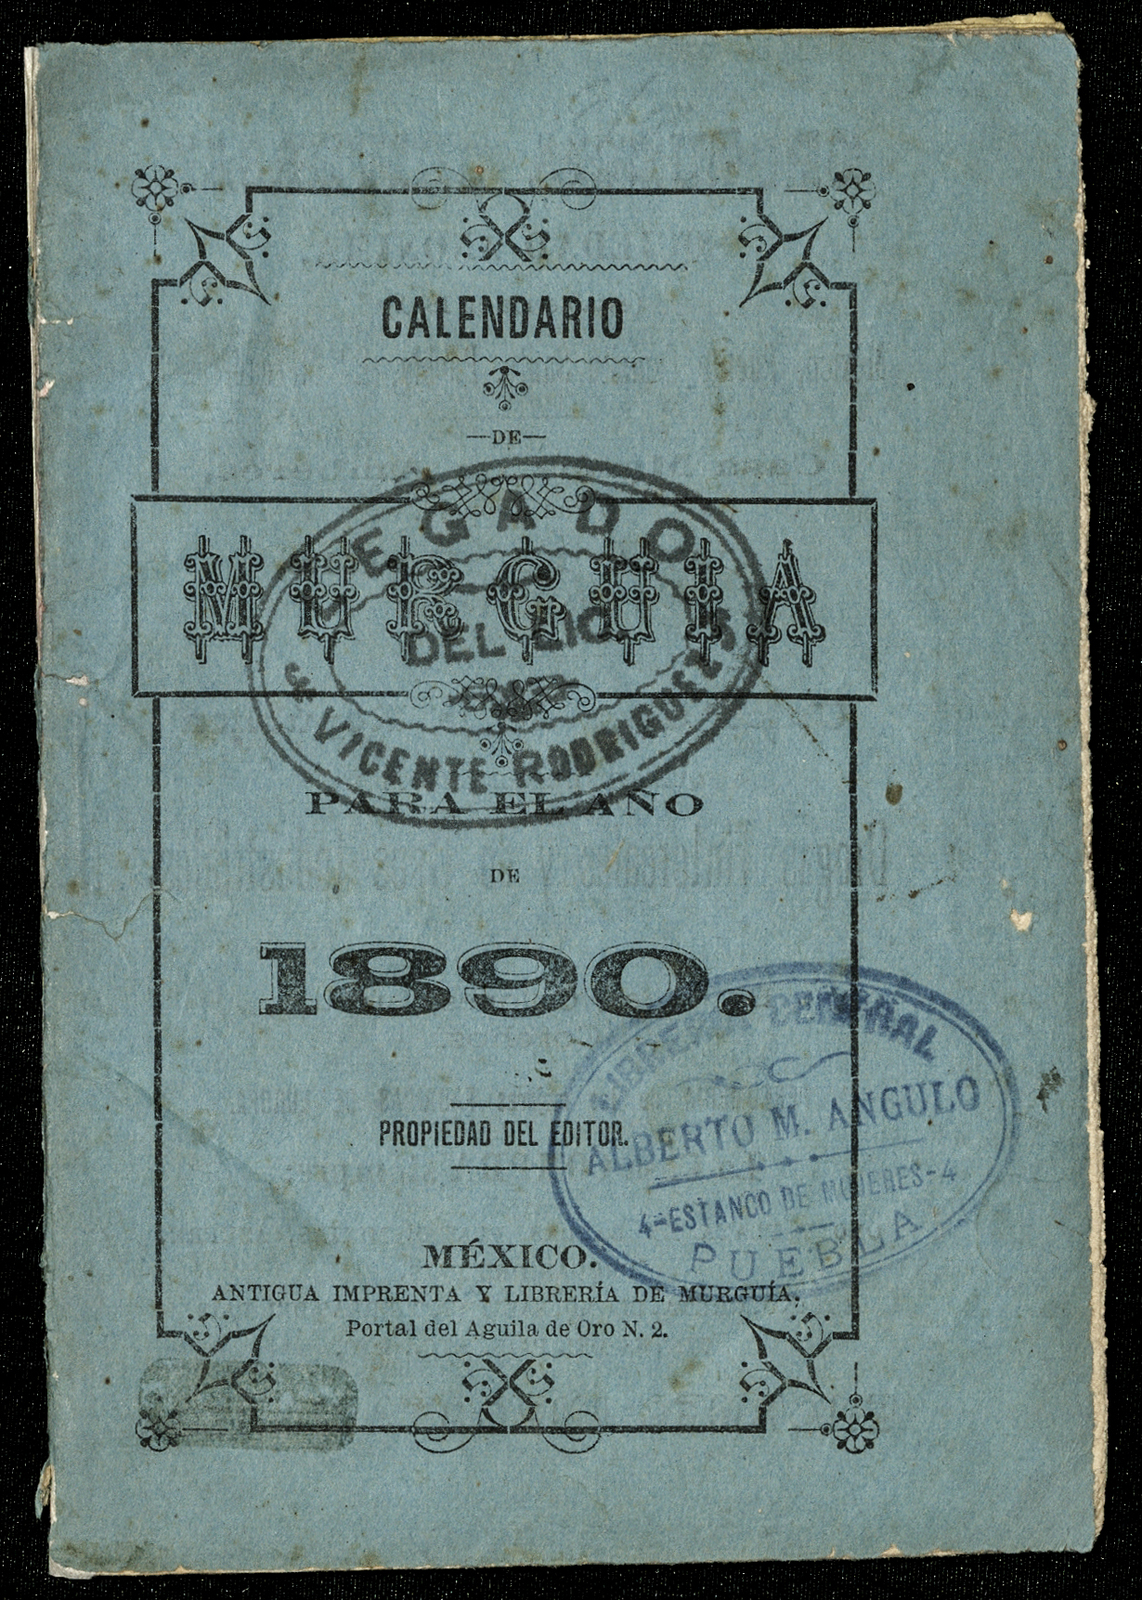 Calendario de Murguia, para 1890. Arreglado al meridiano de México